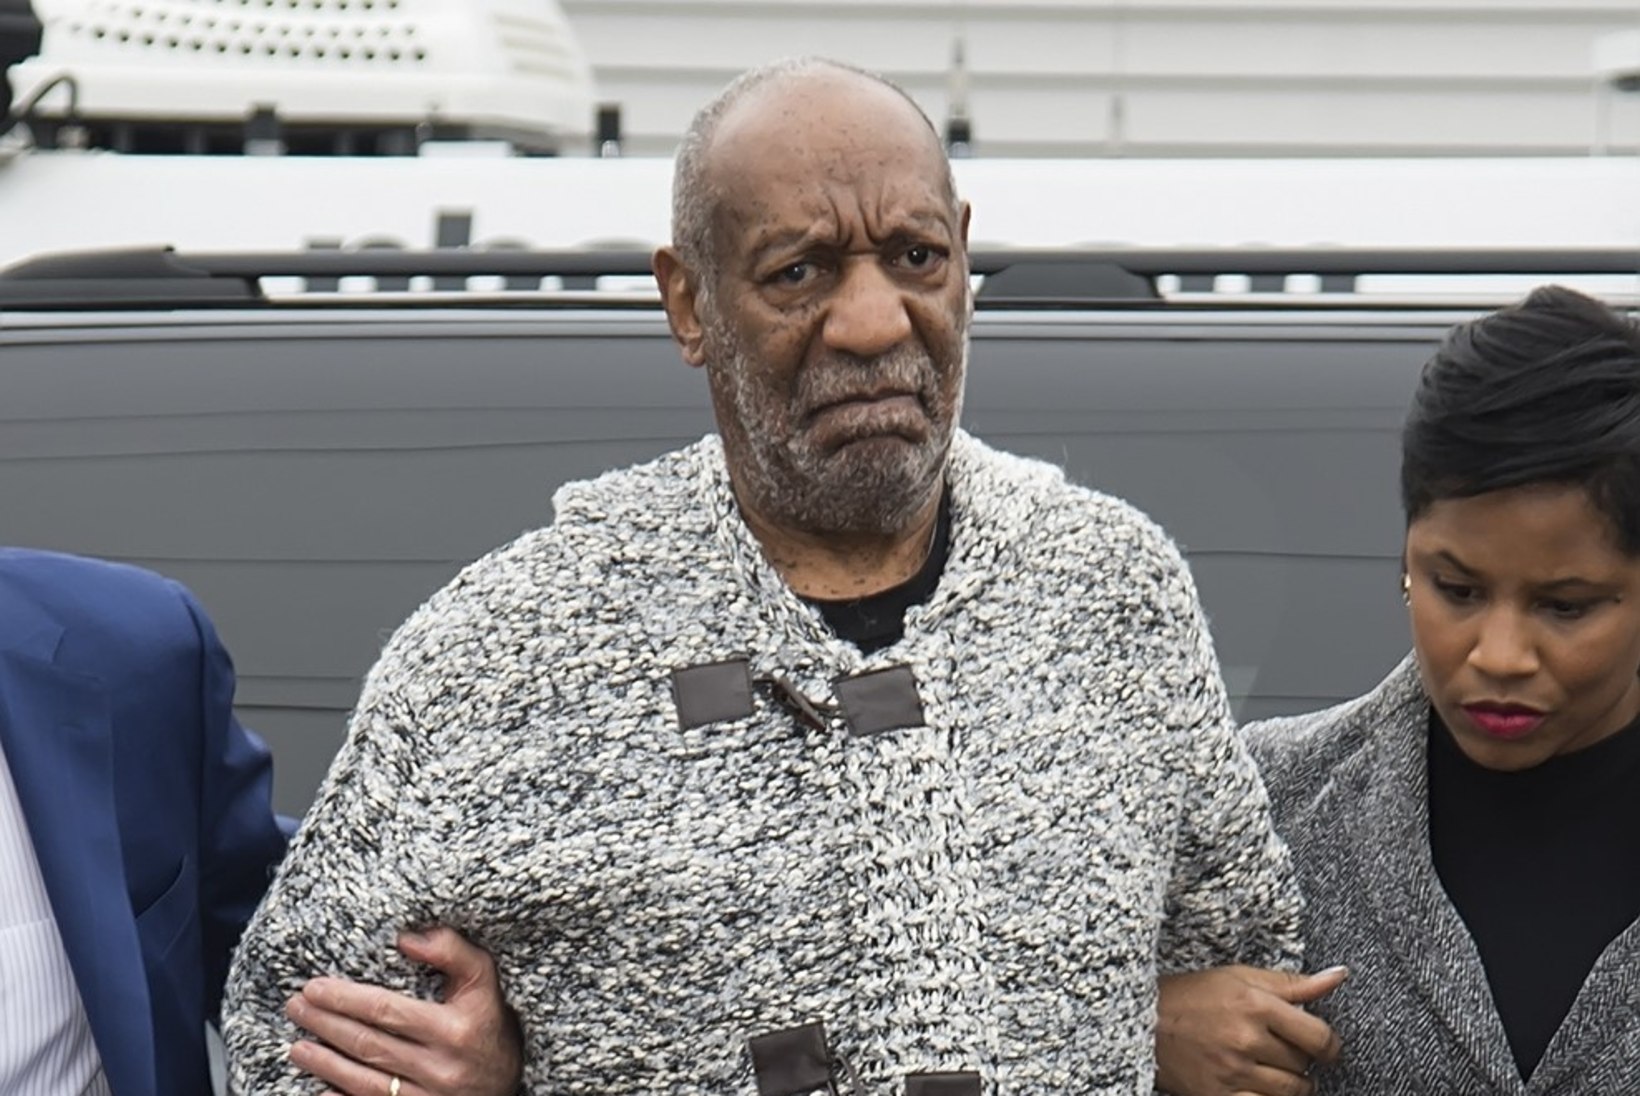 Kanye West: "Bill Cosby on süütu!"